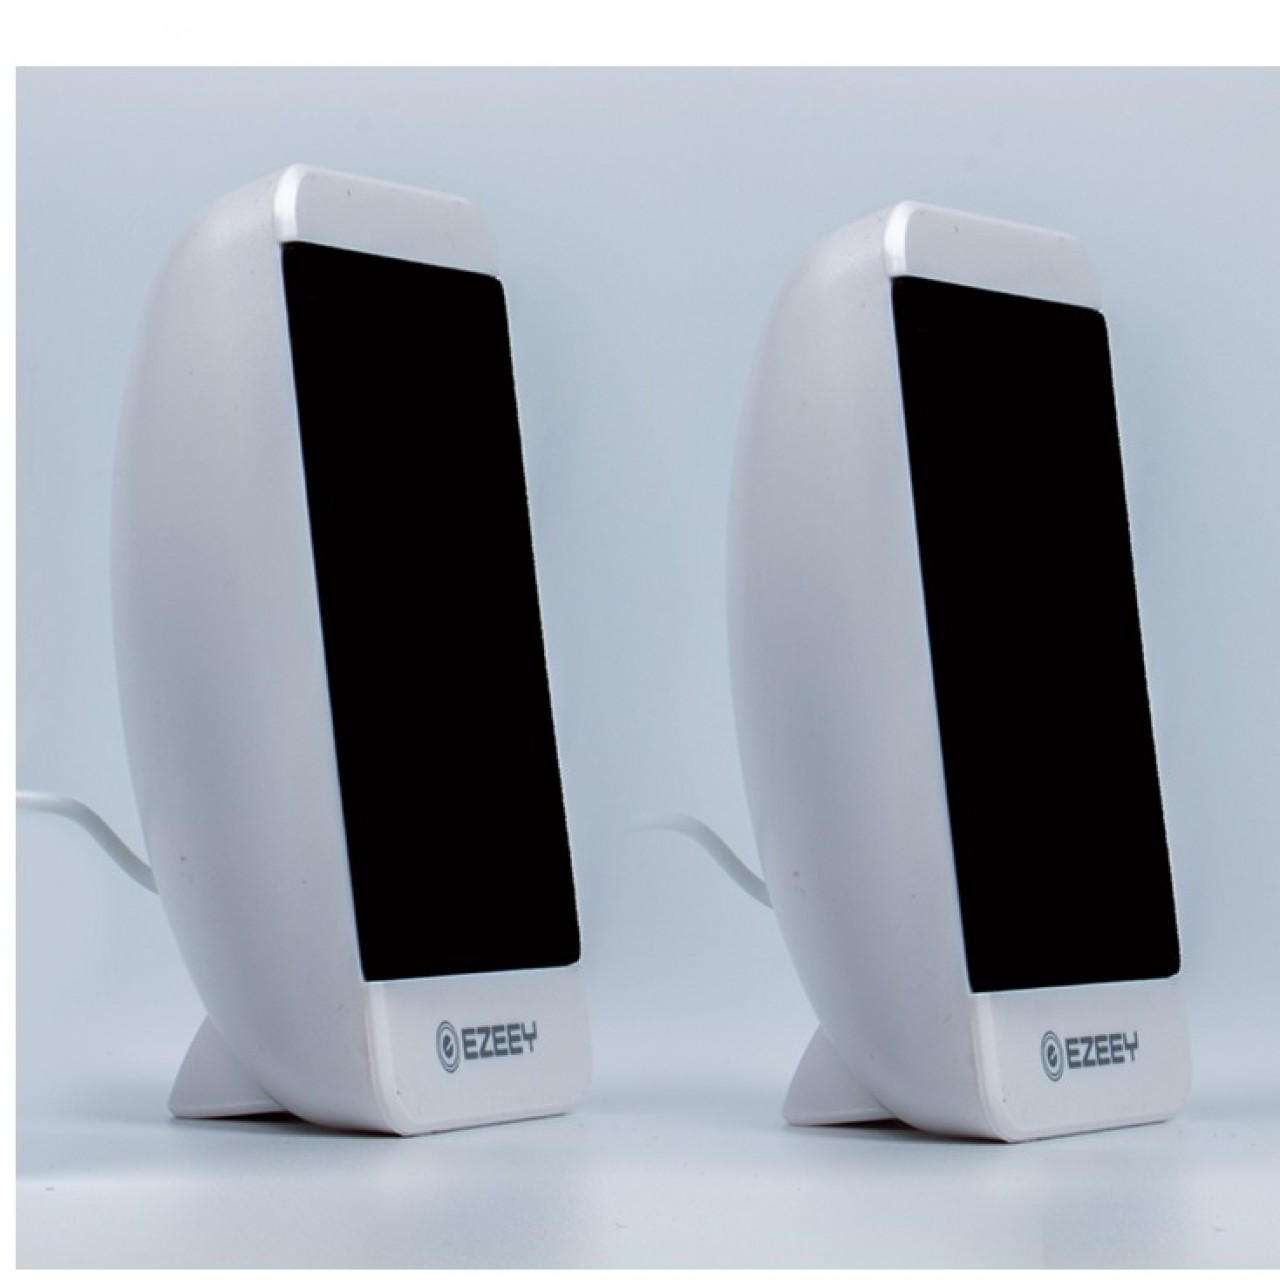 EZEEY S4 USB 3.5mm Portable Speakers for Laptops & Mobiles - White